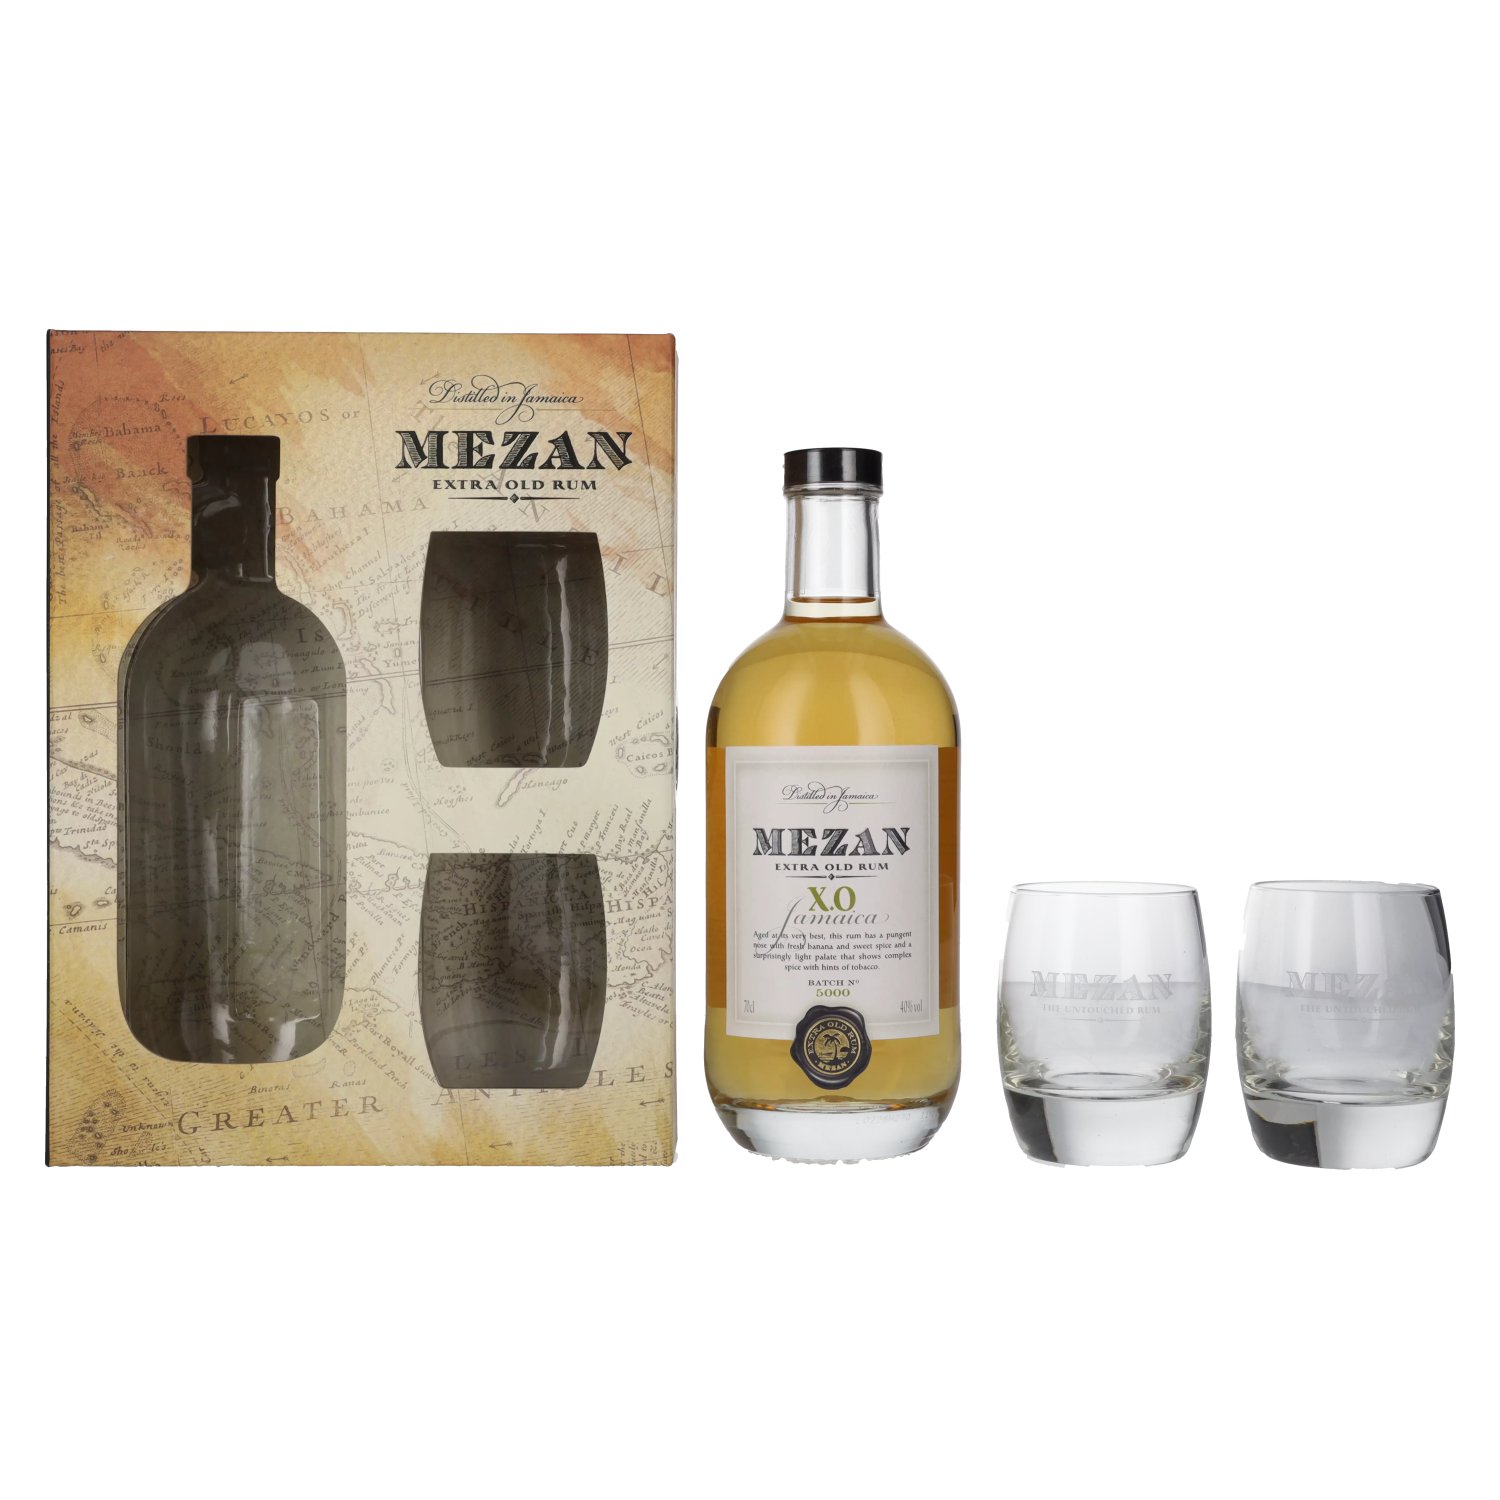 Mezan XO Jamaican Rum 0,7l 40% 2 Vol. glasses with in Giftbox